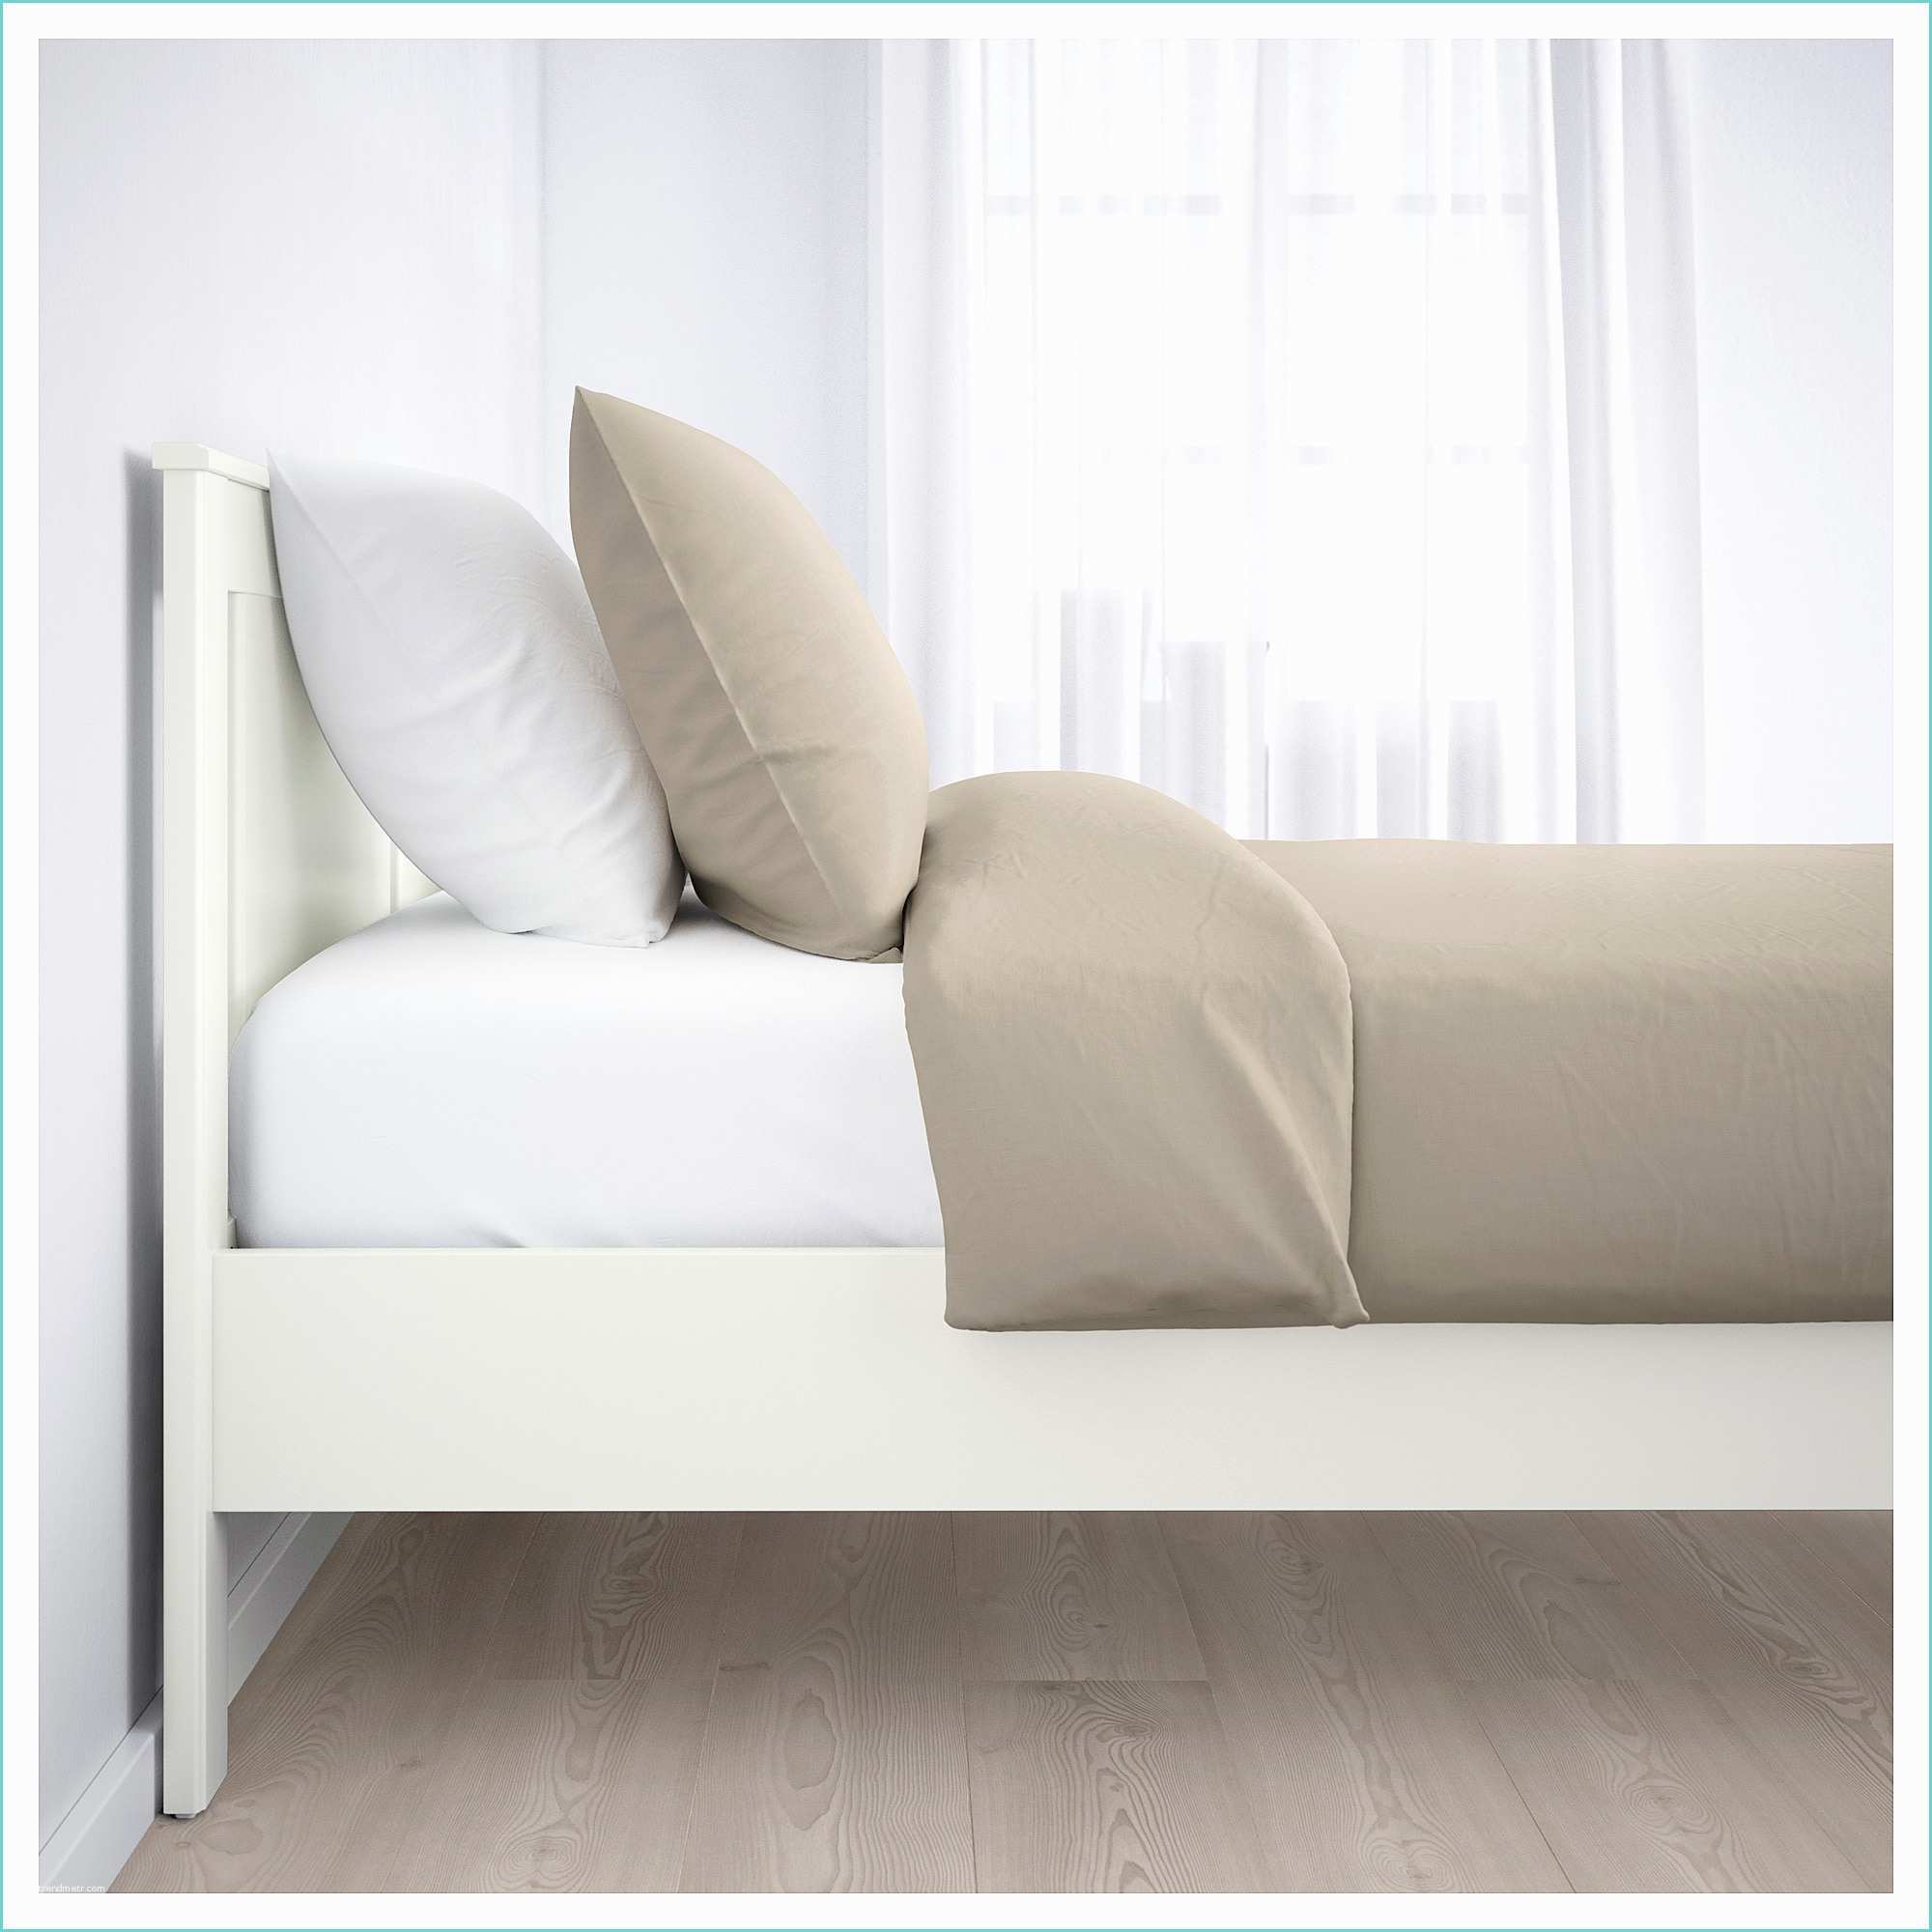 Leirsund Slatted Bed Base Adjustable songesand Bed Frame White Leirsund Standard Double Ikea